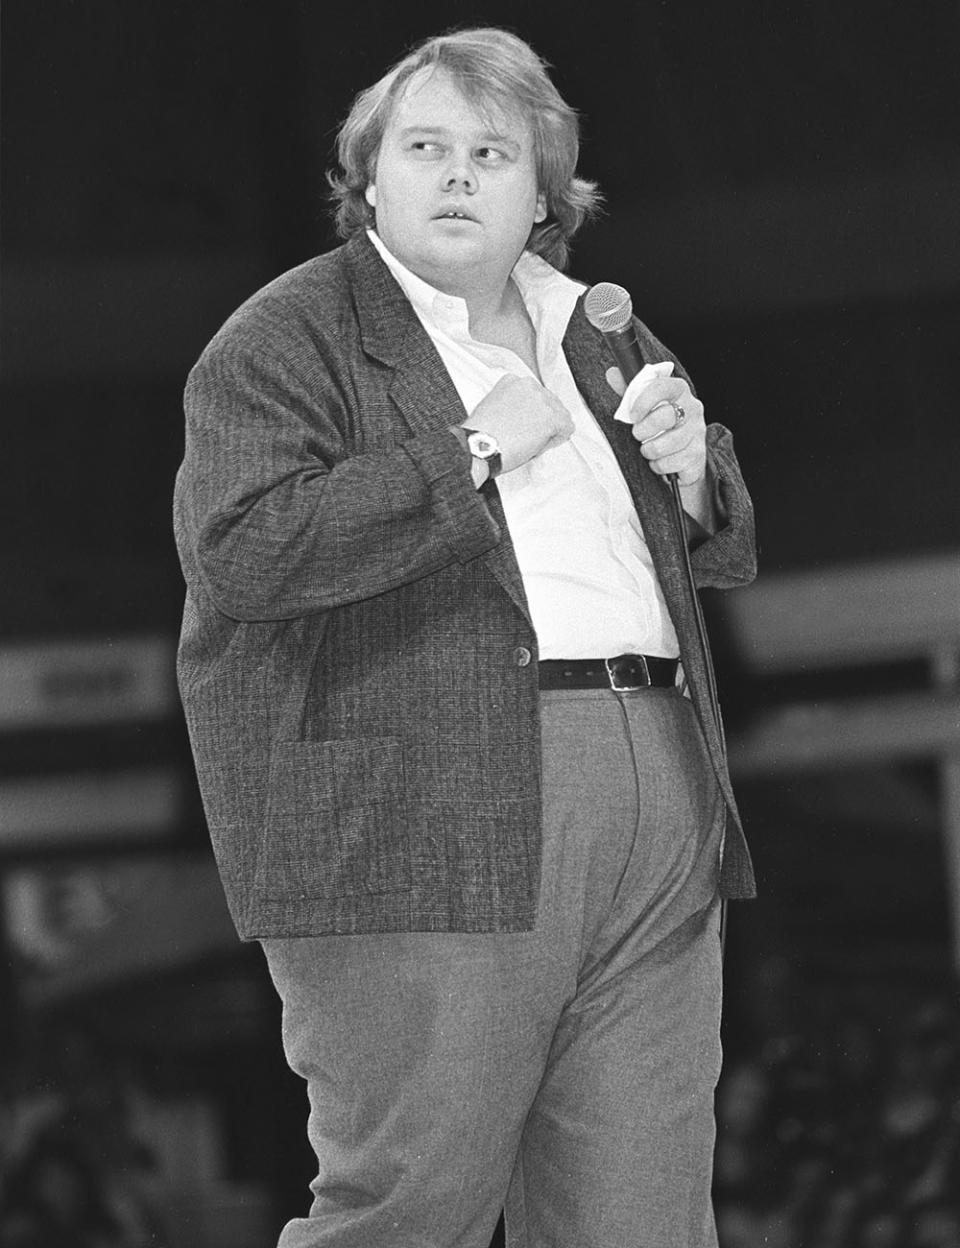 Louie Anderson in 1989 - Credit: John Atashian/Getty Images